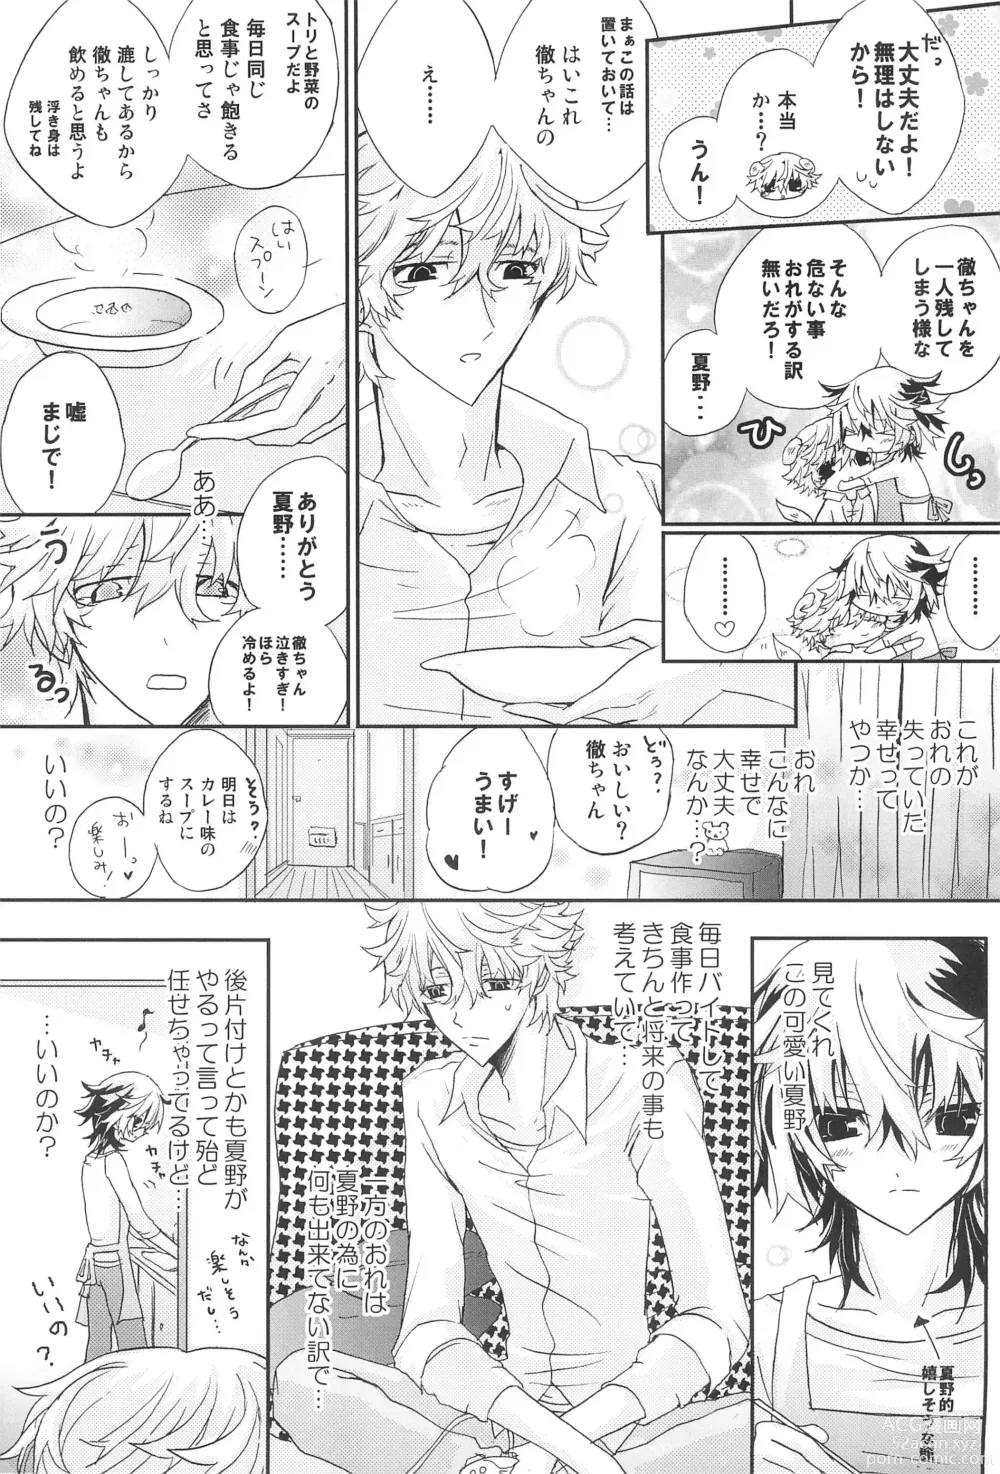 Page 9 of doujinshi Shiki-hon 18